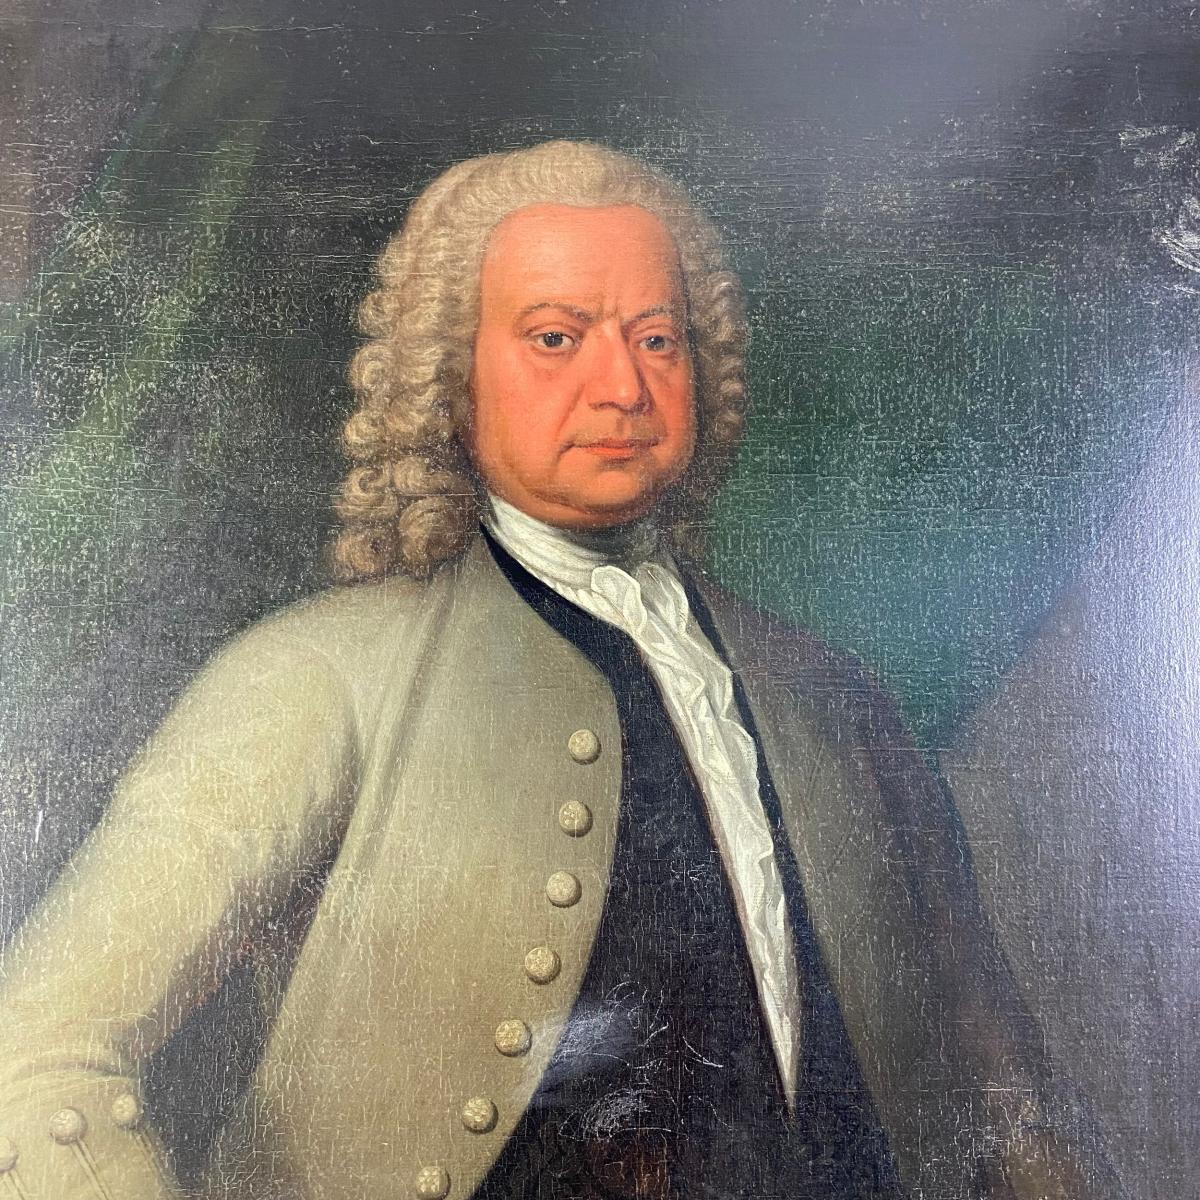 Large Georgian oil on canvas Portrait of a Gentleman